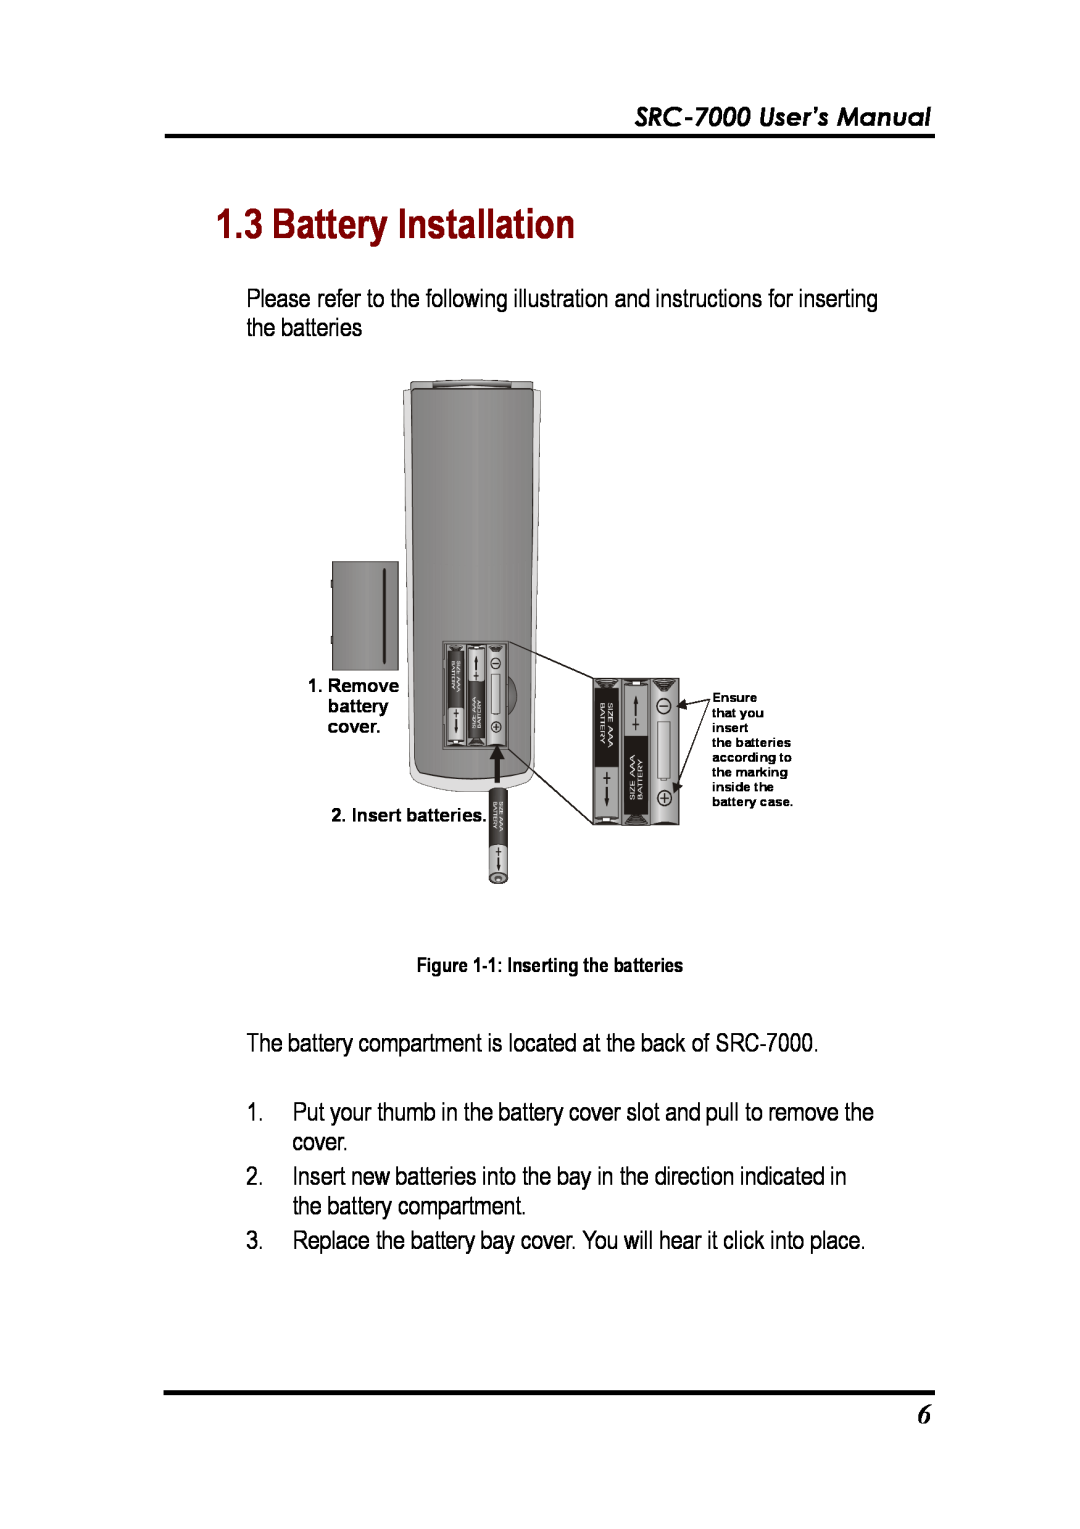 Sunwave Tech manual Battery Installation, SRC-7000 User’s Manual 